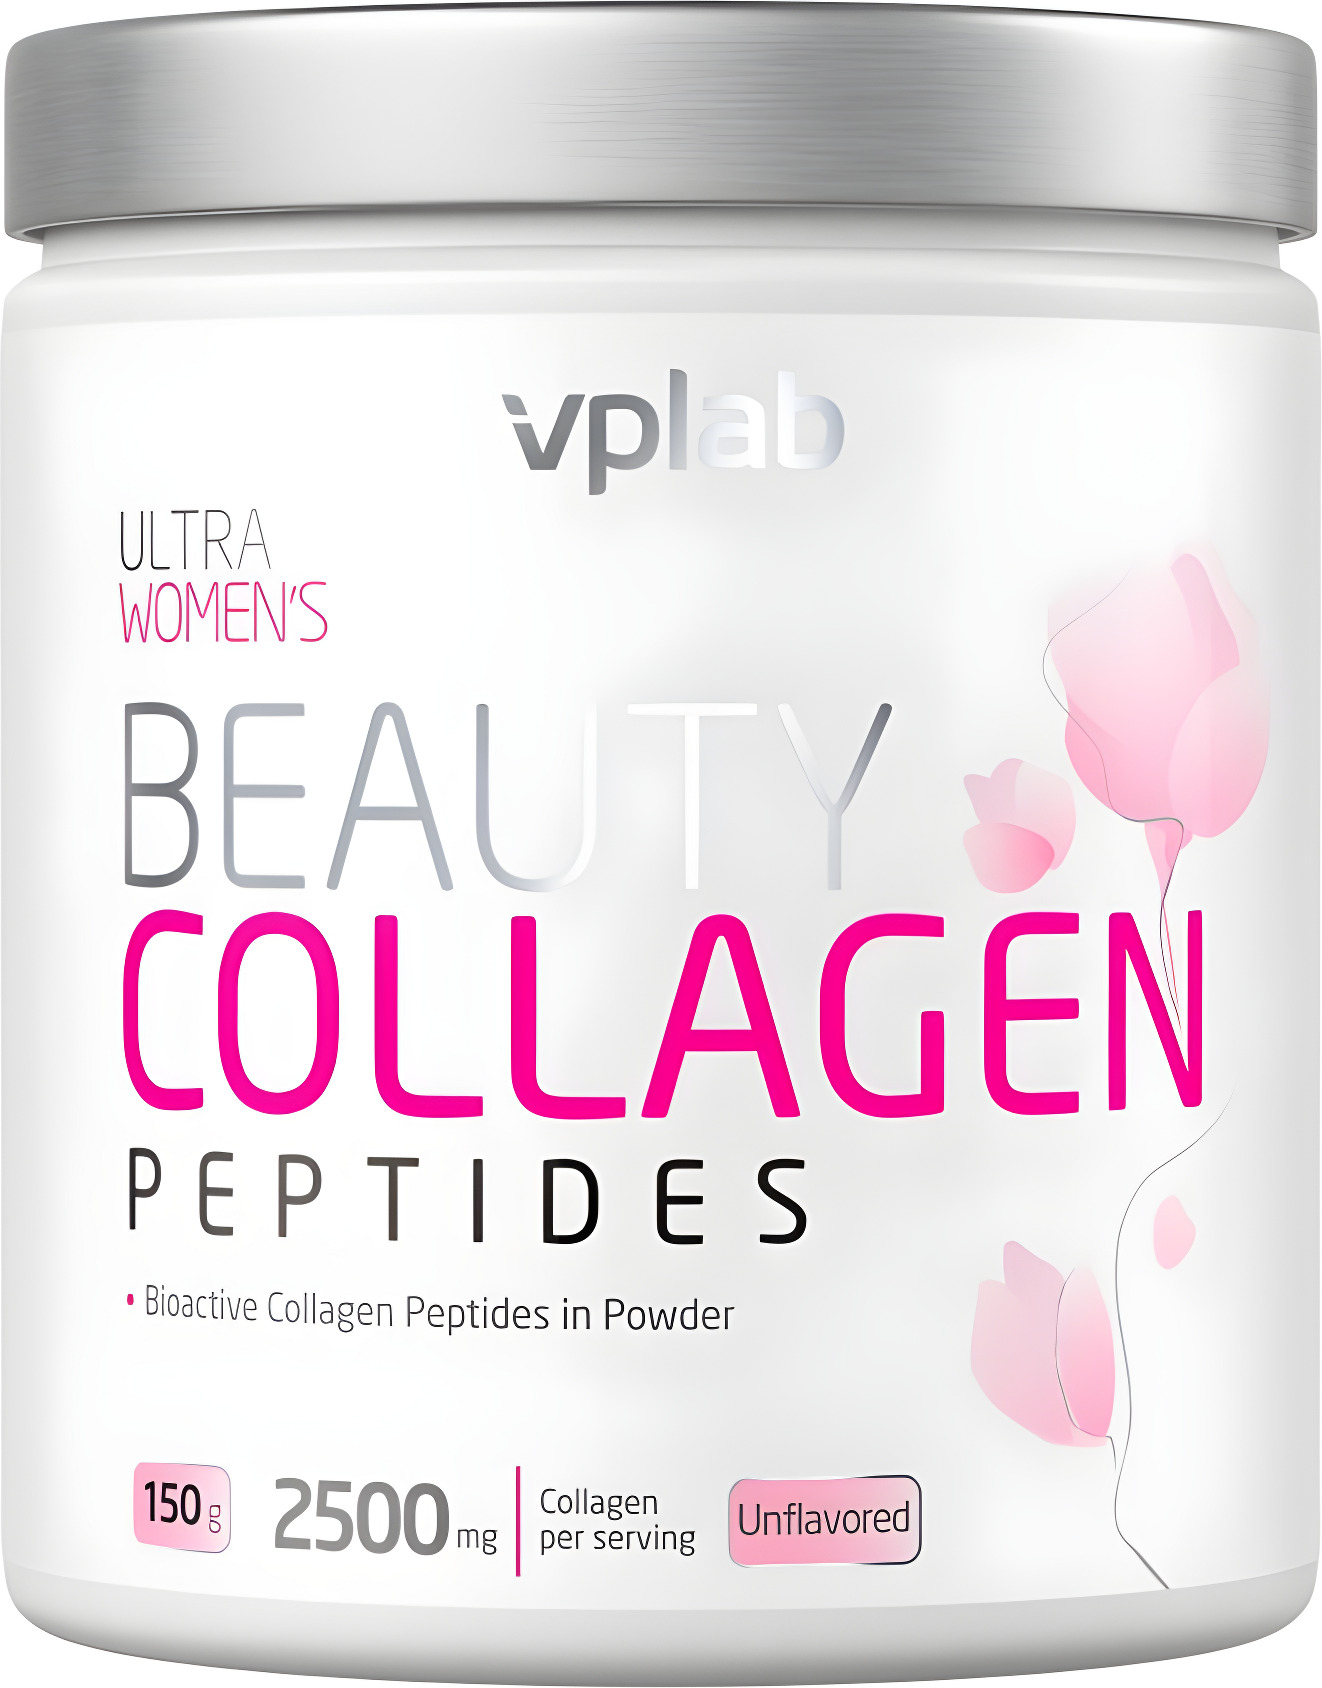 Коллаген столички. ВПЛАБ коллаген для женщин Бьюти 2500мг. Коллаген VPLAB / Beauty Collagen Peptides / 150 g. Коллаген VPLAB Collagen Peptides. ВПЛАБ Бьюти коллаген пептиды VPLAB Beauty Collagen Peptides.